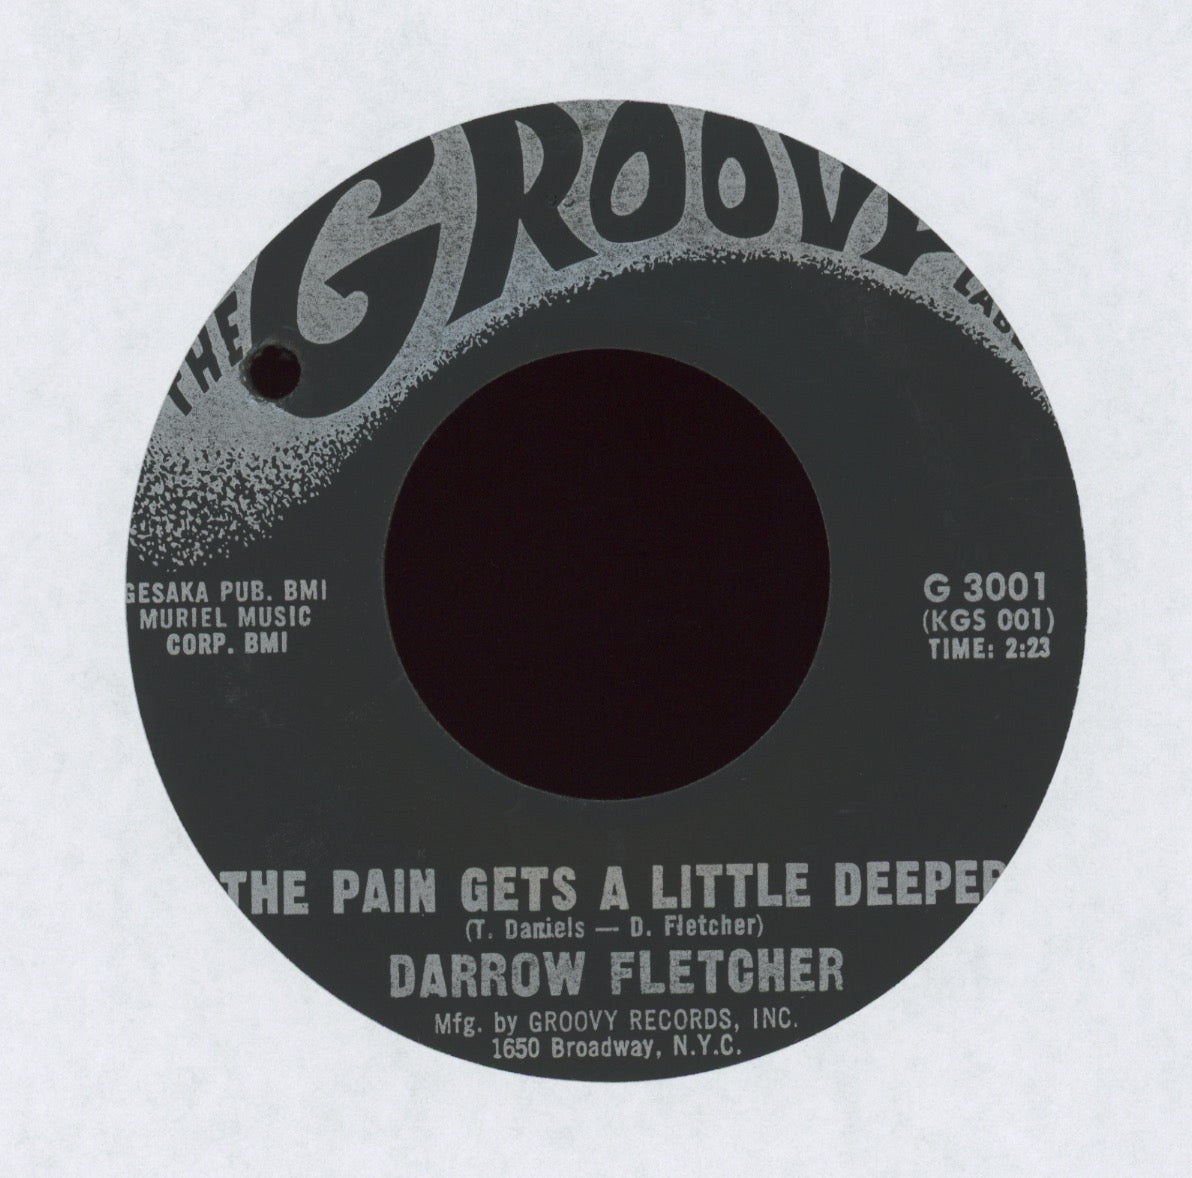 Darrow Fletcher - The Pain Gets A Little Deeperon Groovy